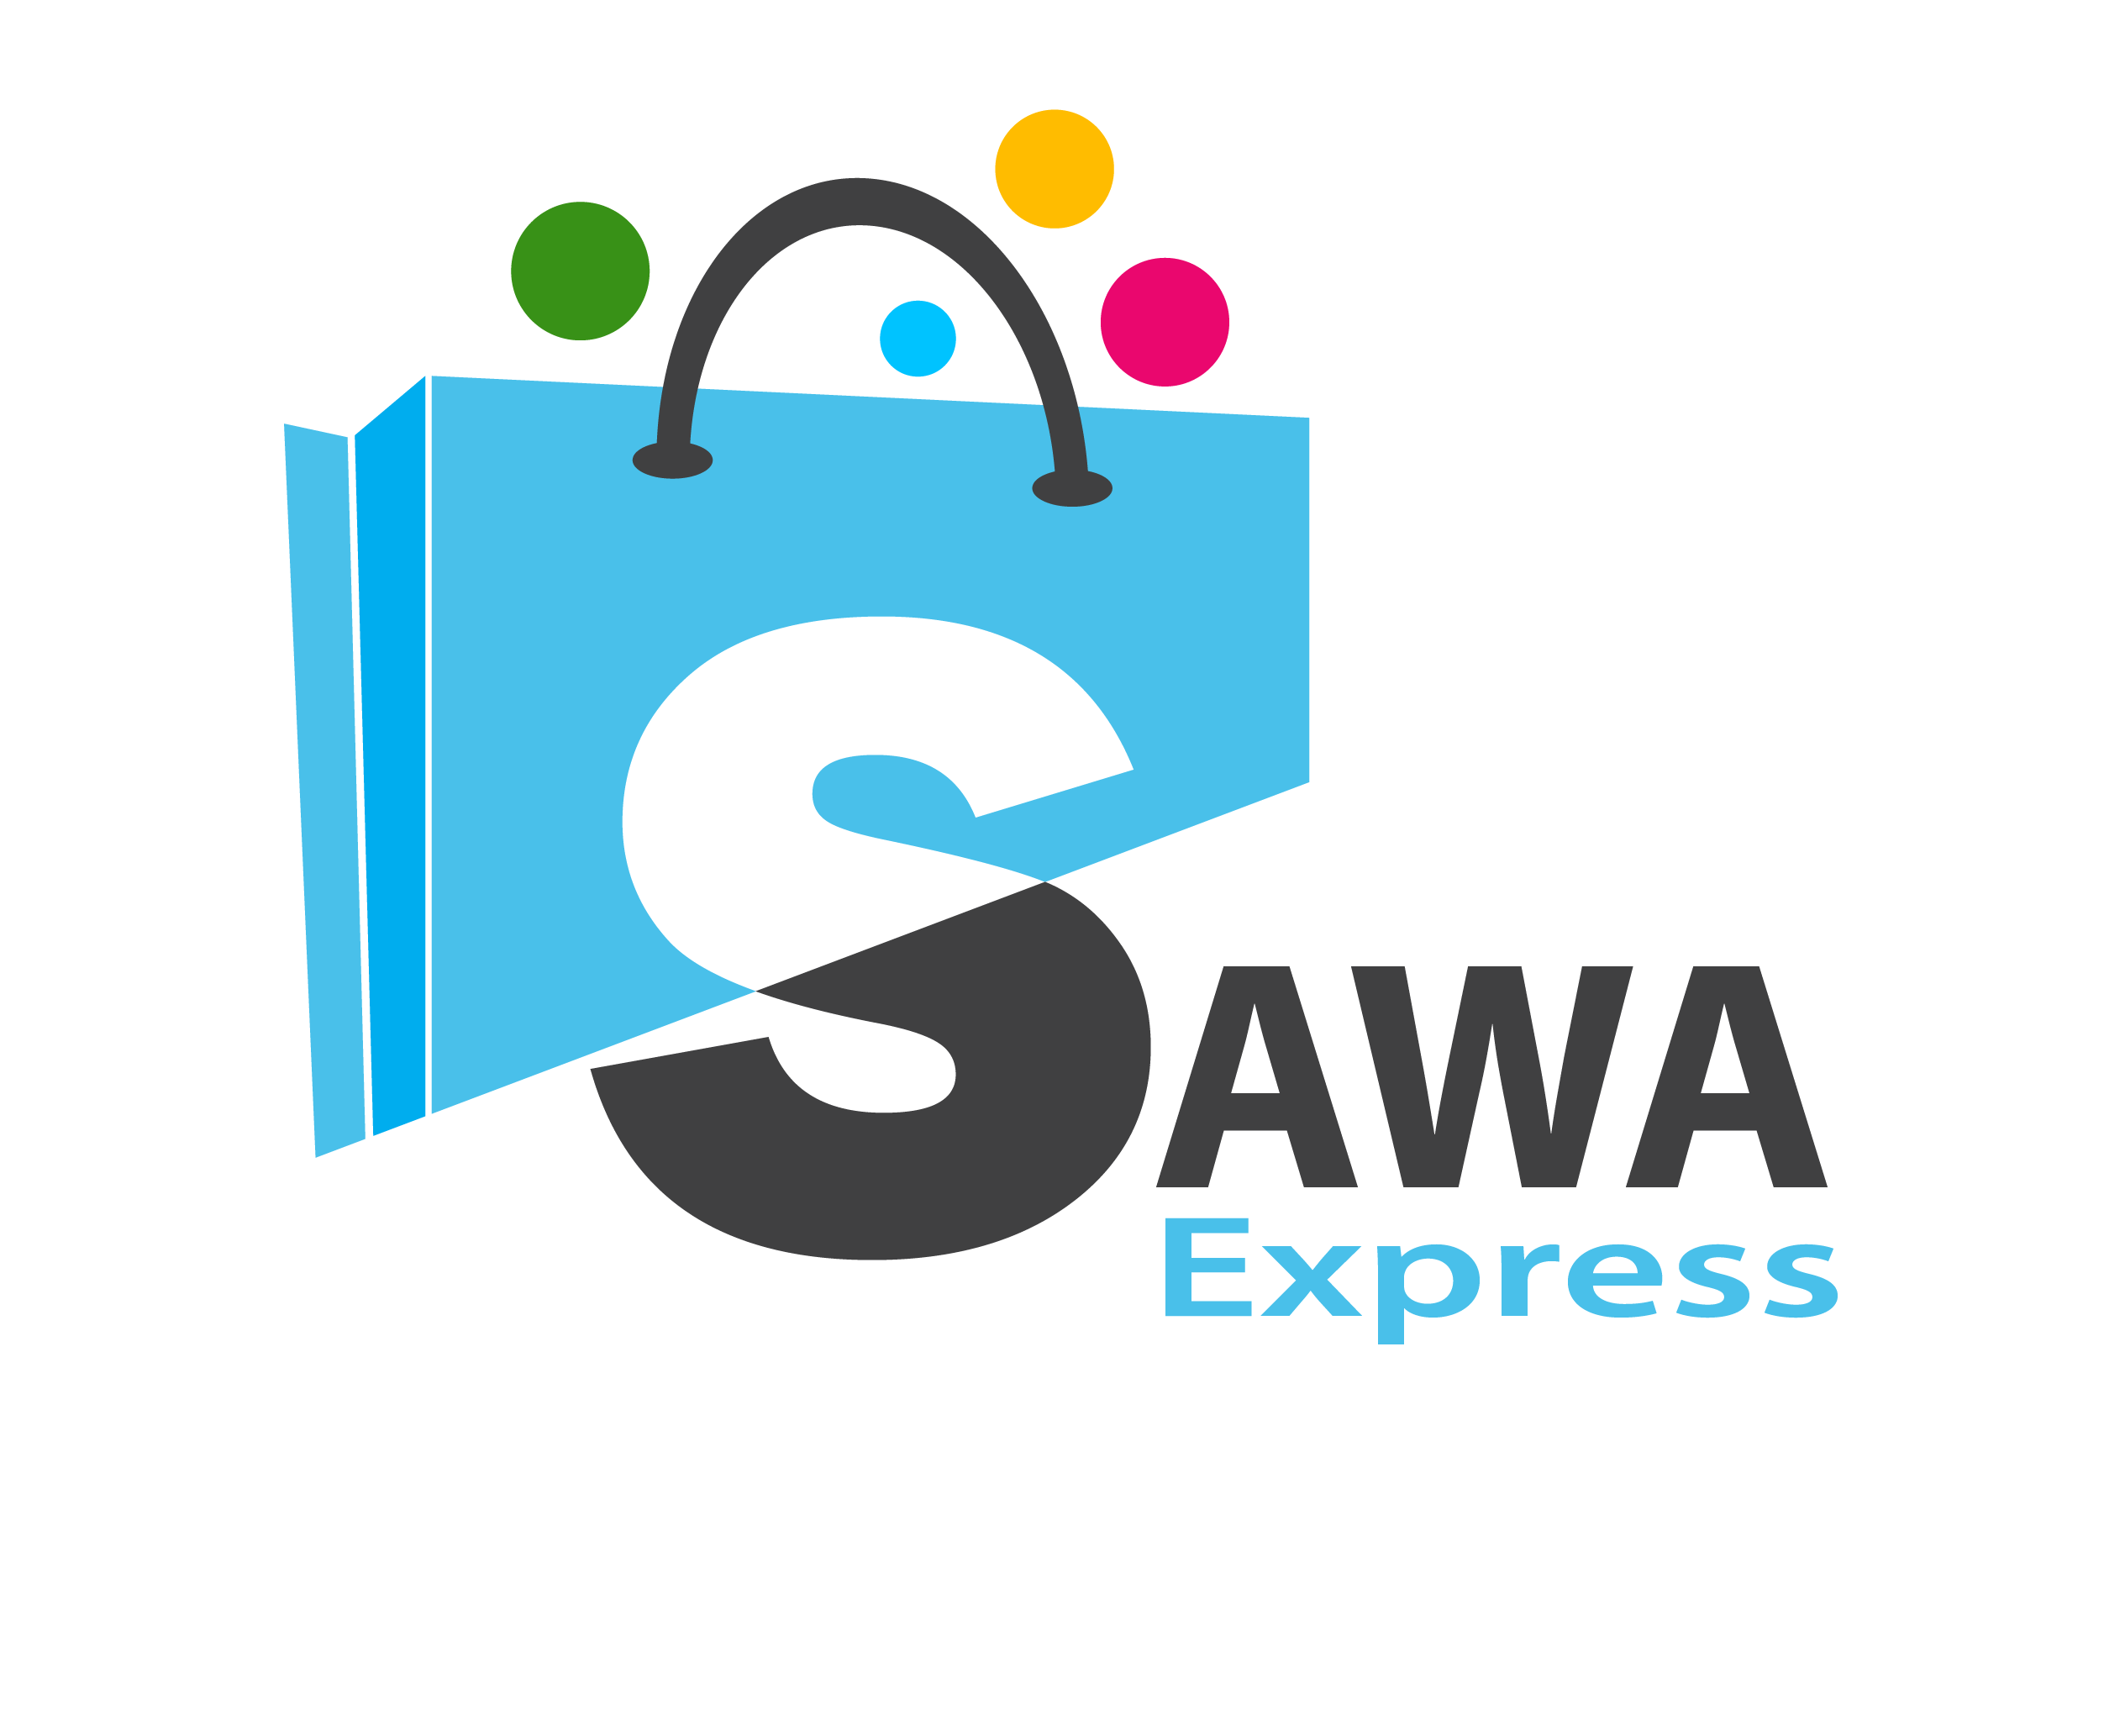 sawa express